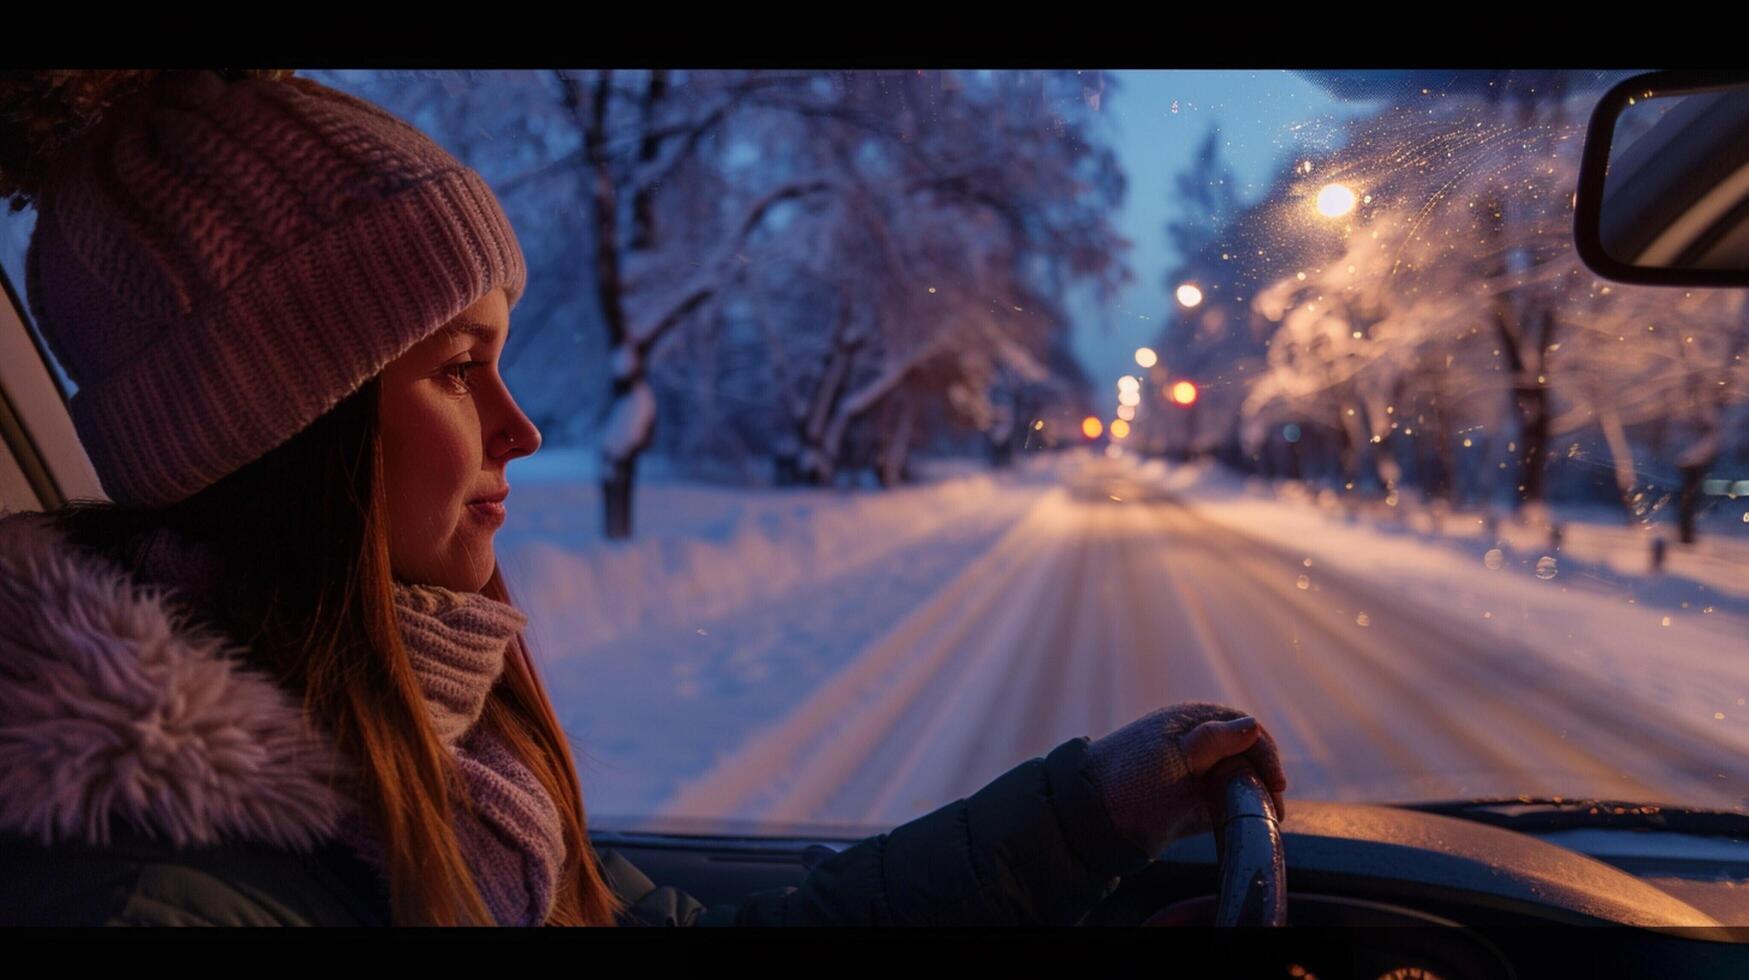 a young woman driving enjoying the winter night photo